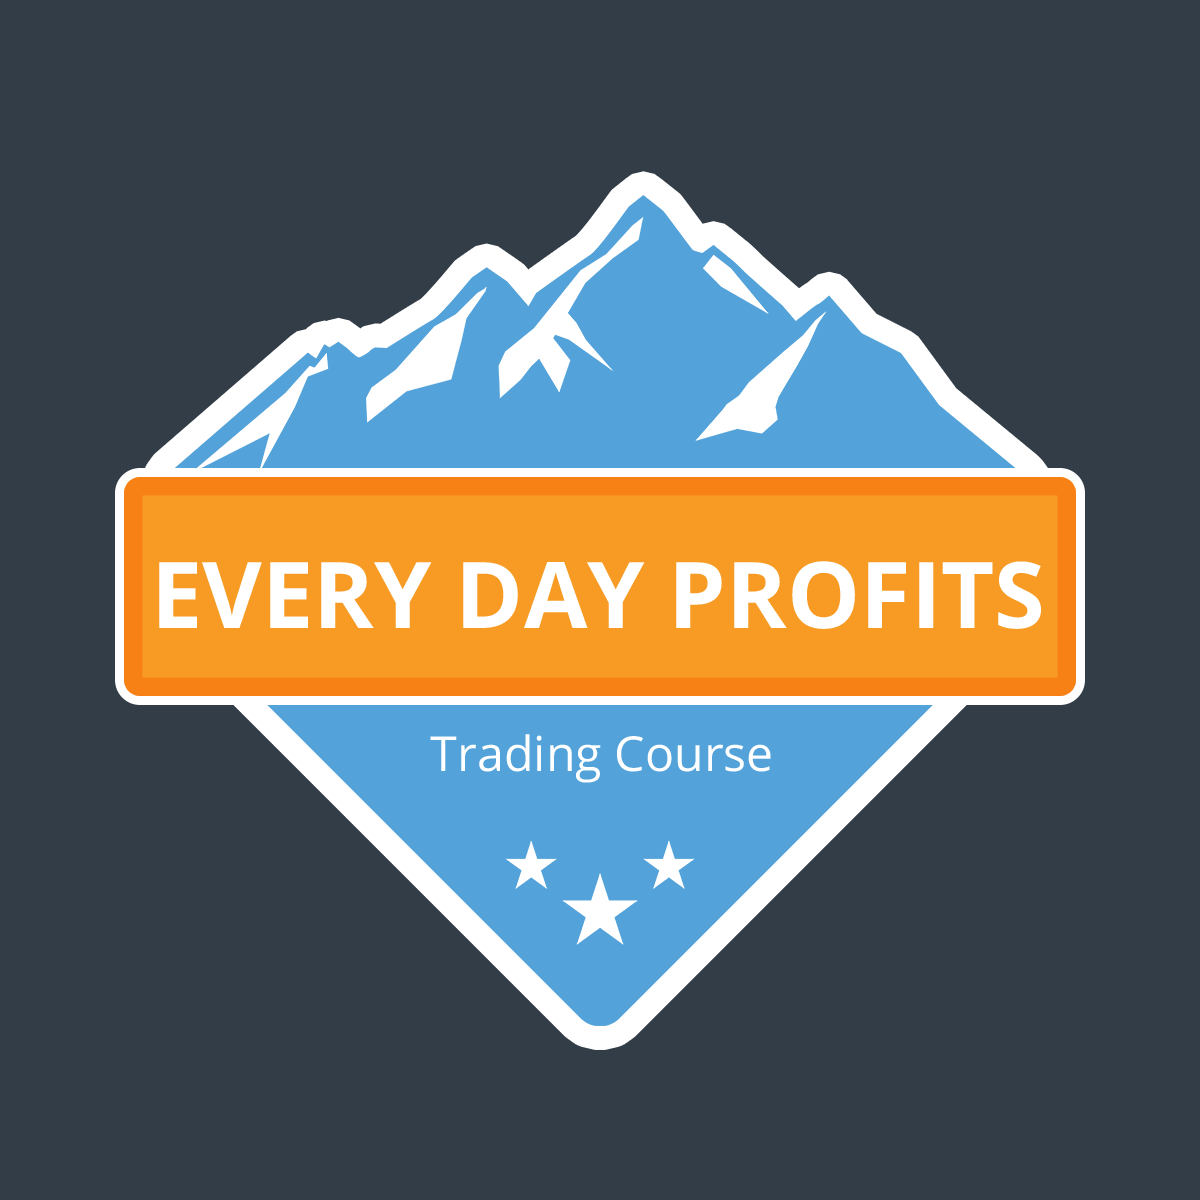 Everyday Profits Strategy - Base Camp Trading